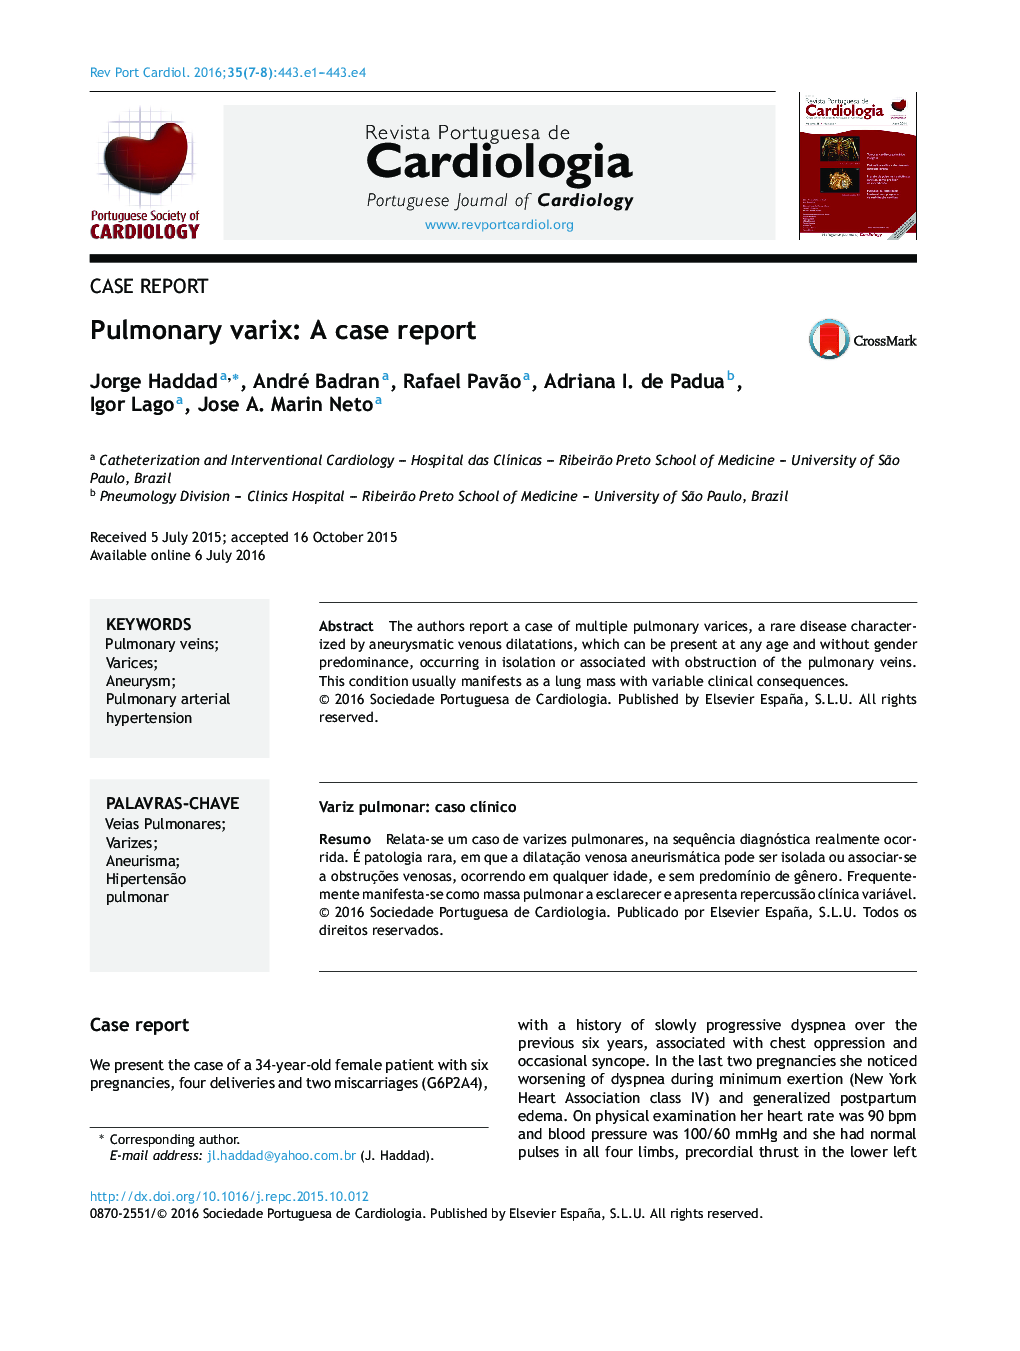 Pulmonary varix: A case report